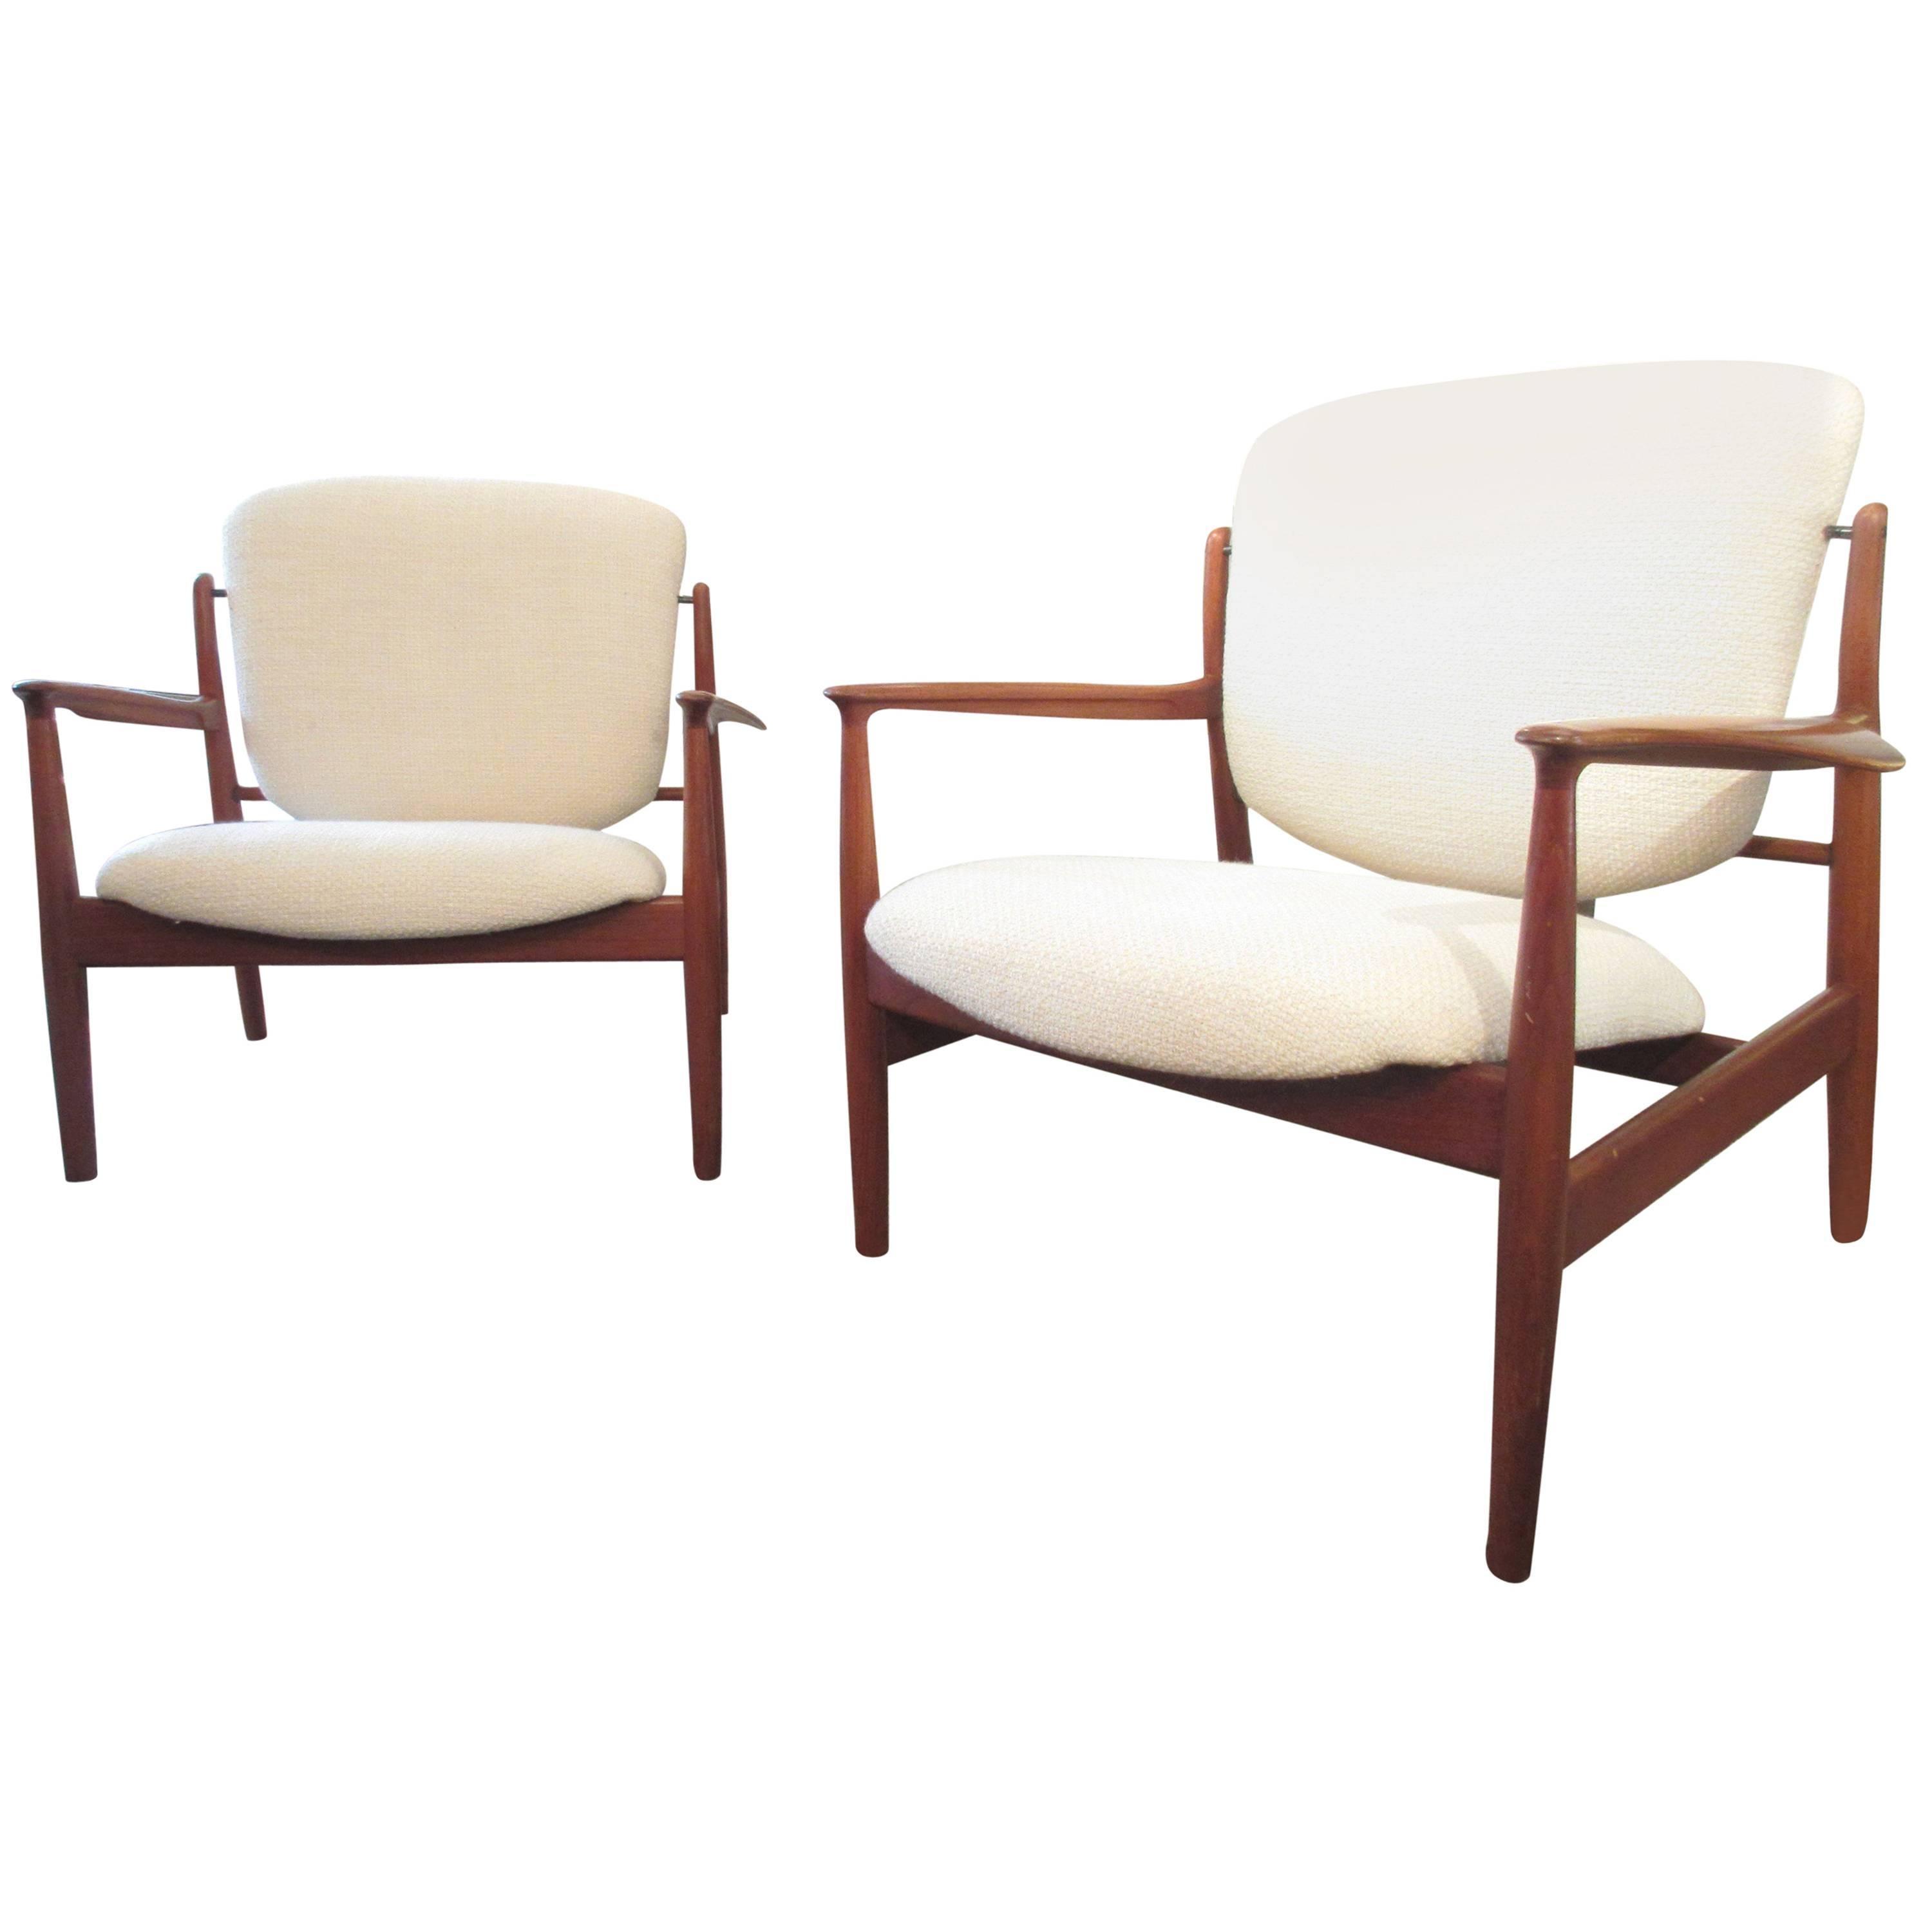 Set of Two Easy FD 136 Chairs by Finn Juhl, Denmark For Sale